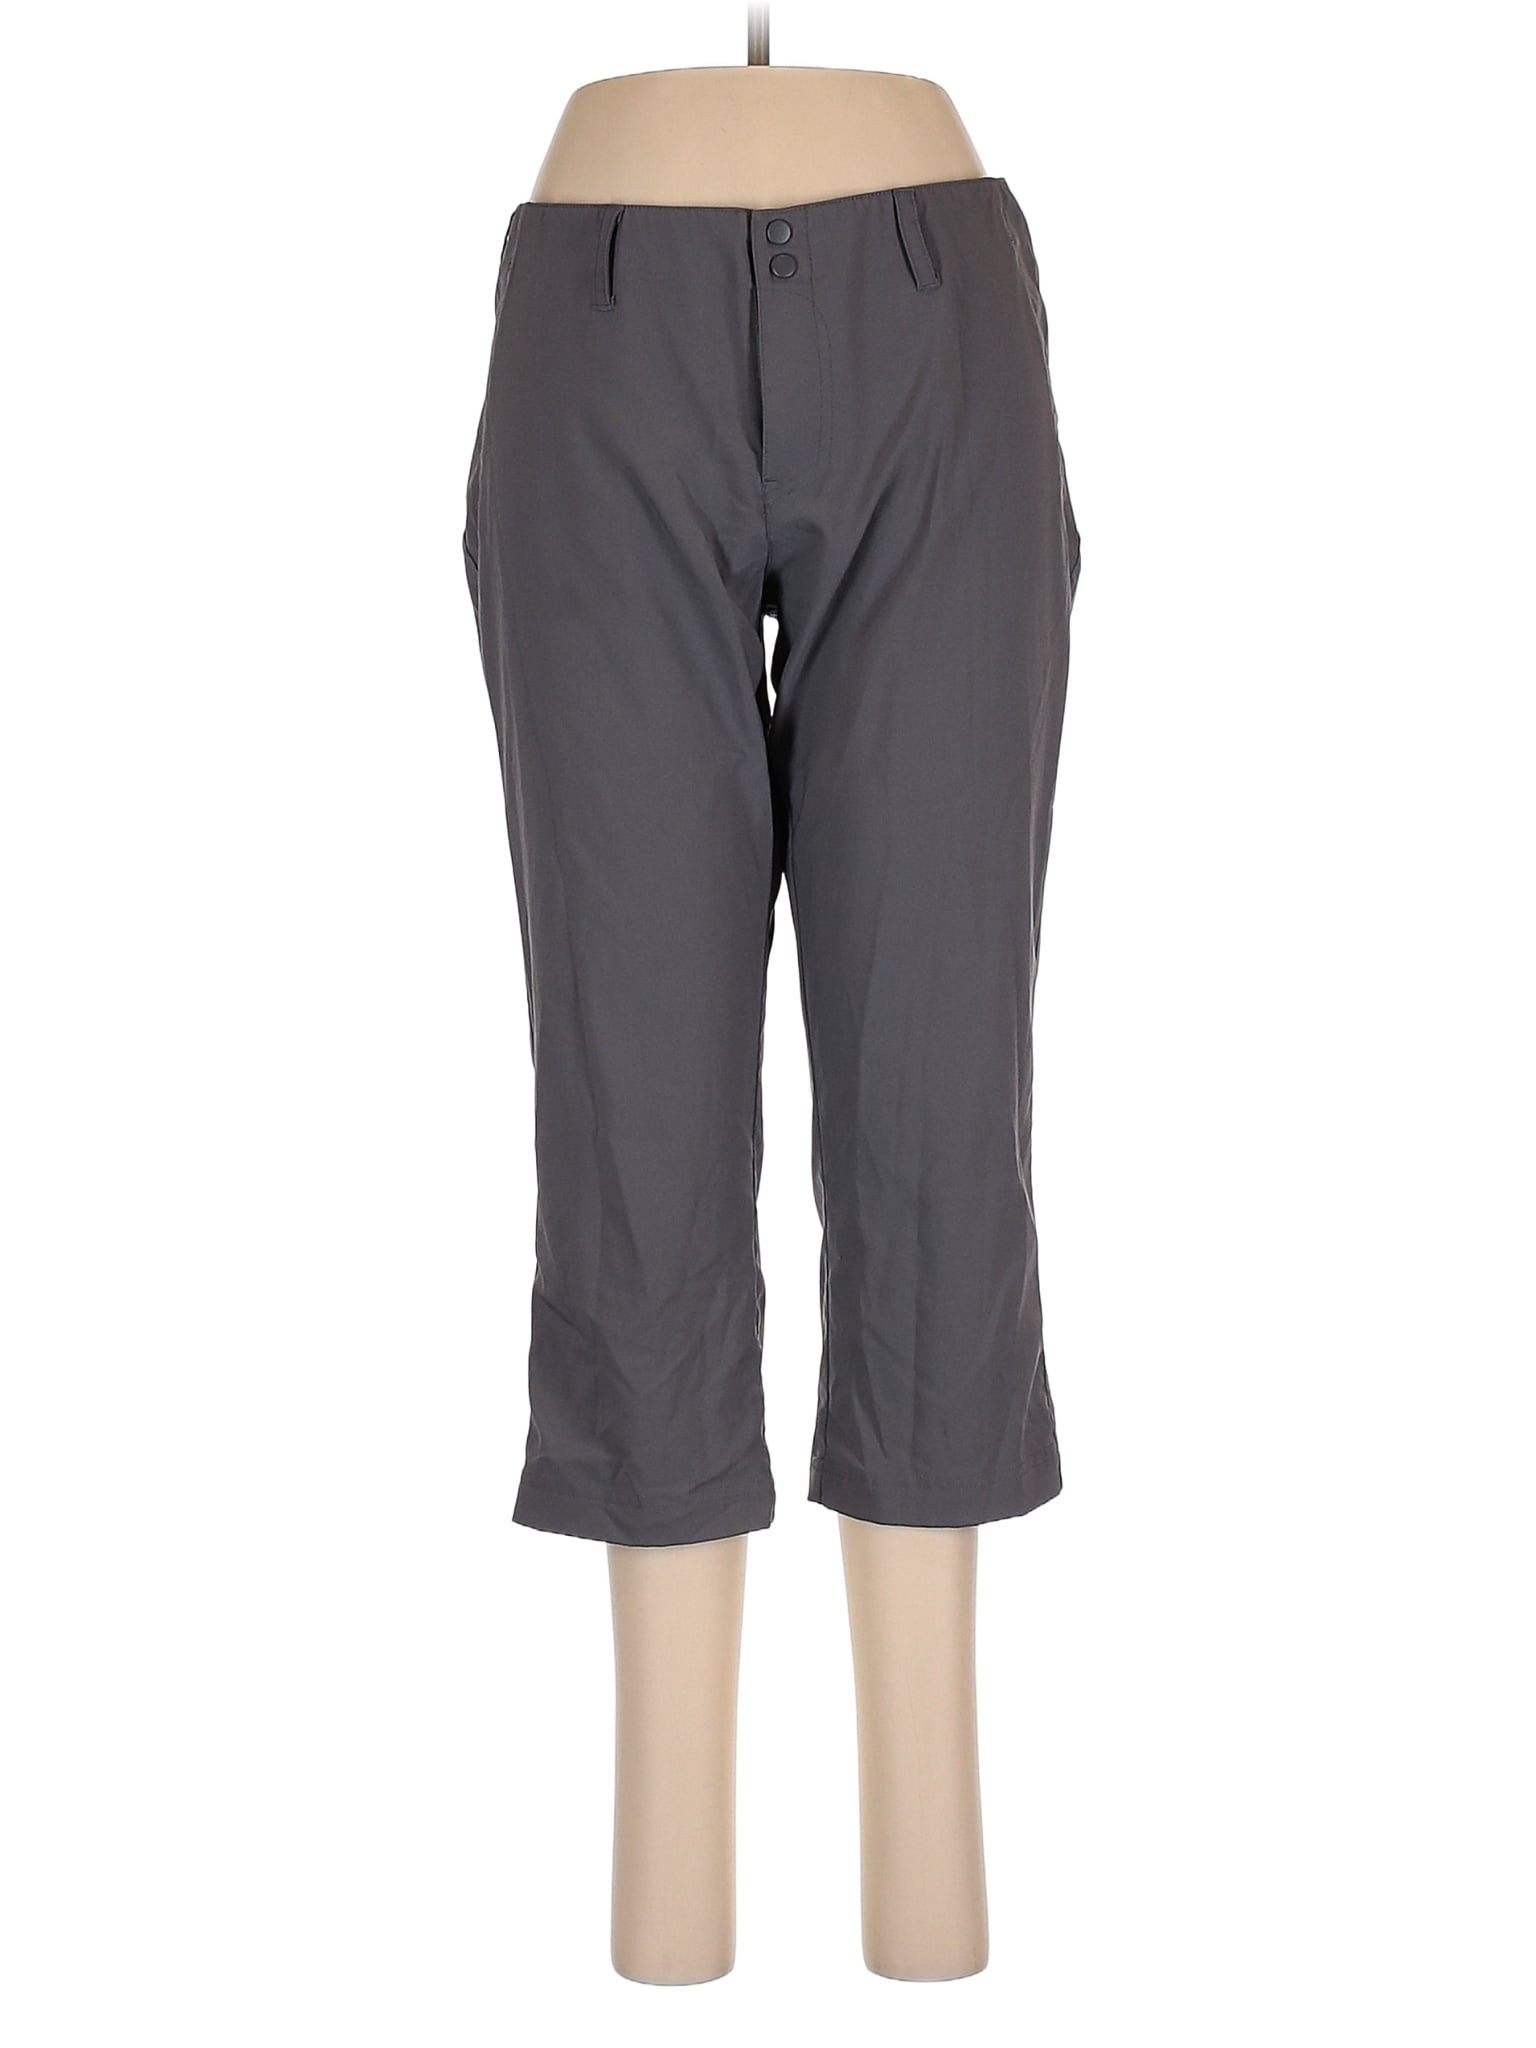 Pre-Owned Merrell Women's Size 6 Active Pants - Walmart.com